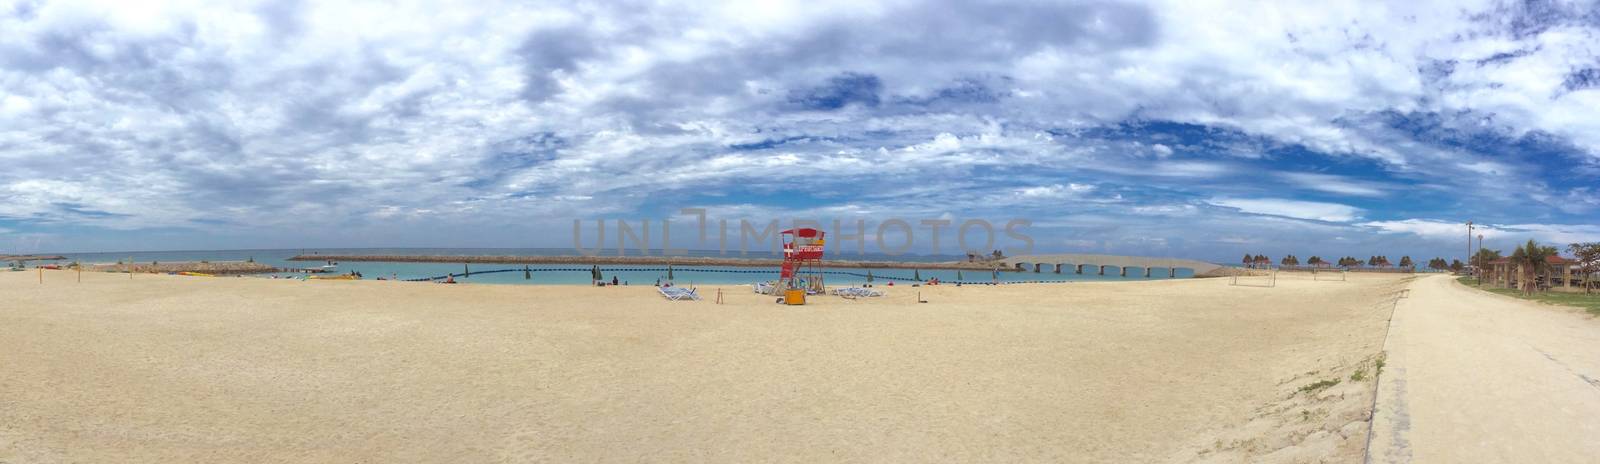 Okinawa beach, lifeguard station, white cloud and sea by cougarsan